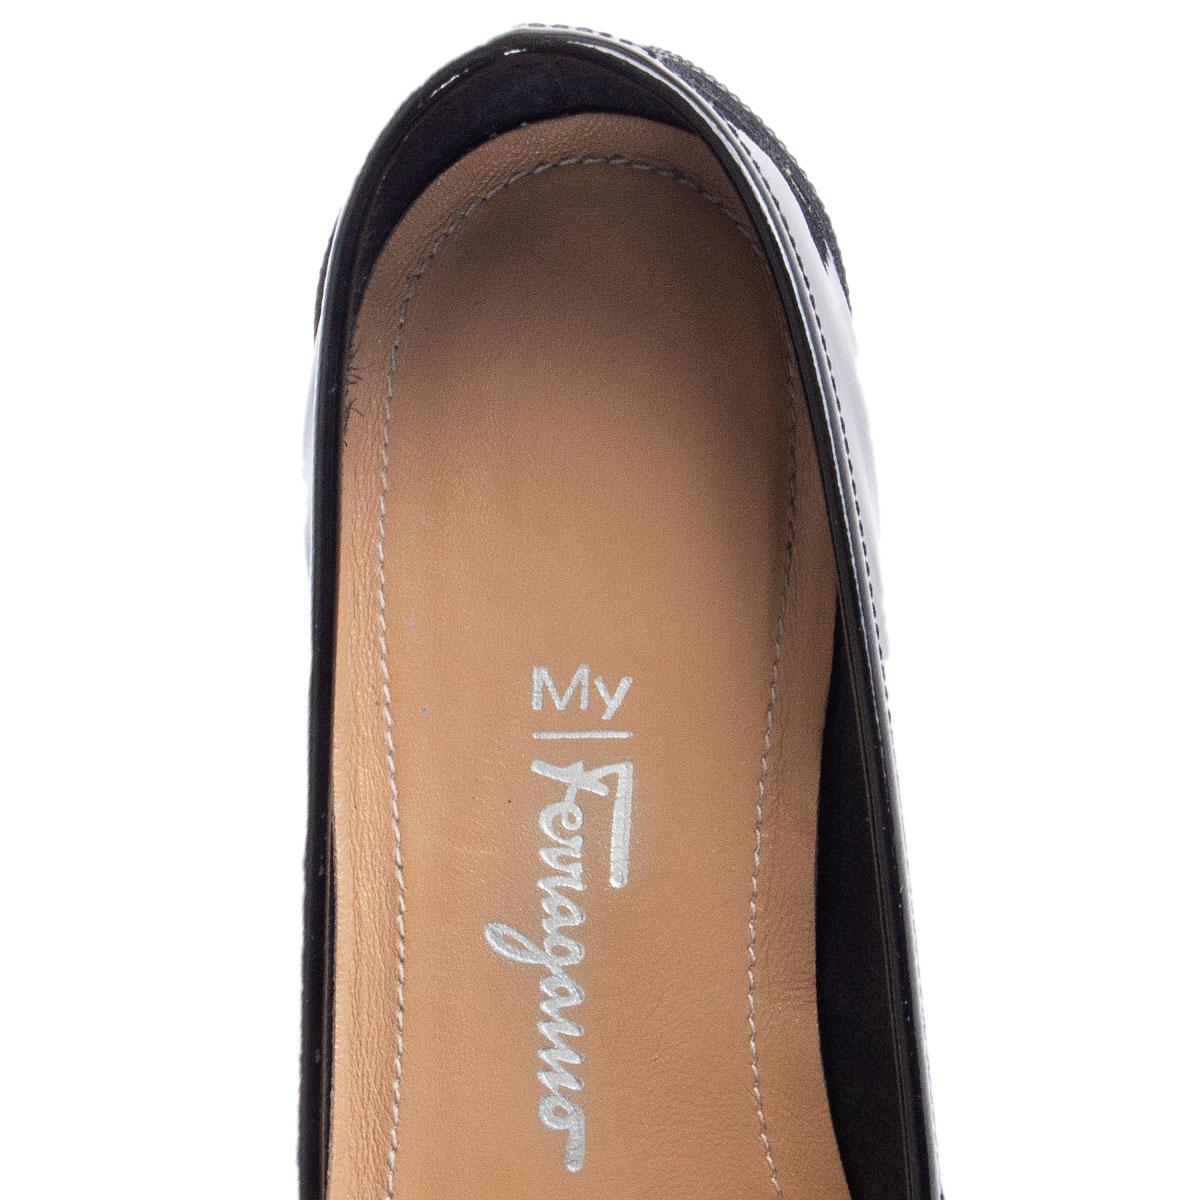 Black SALVATORE FERRAGAMO black patent leather Loafers Flats Shoes 37.5